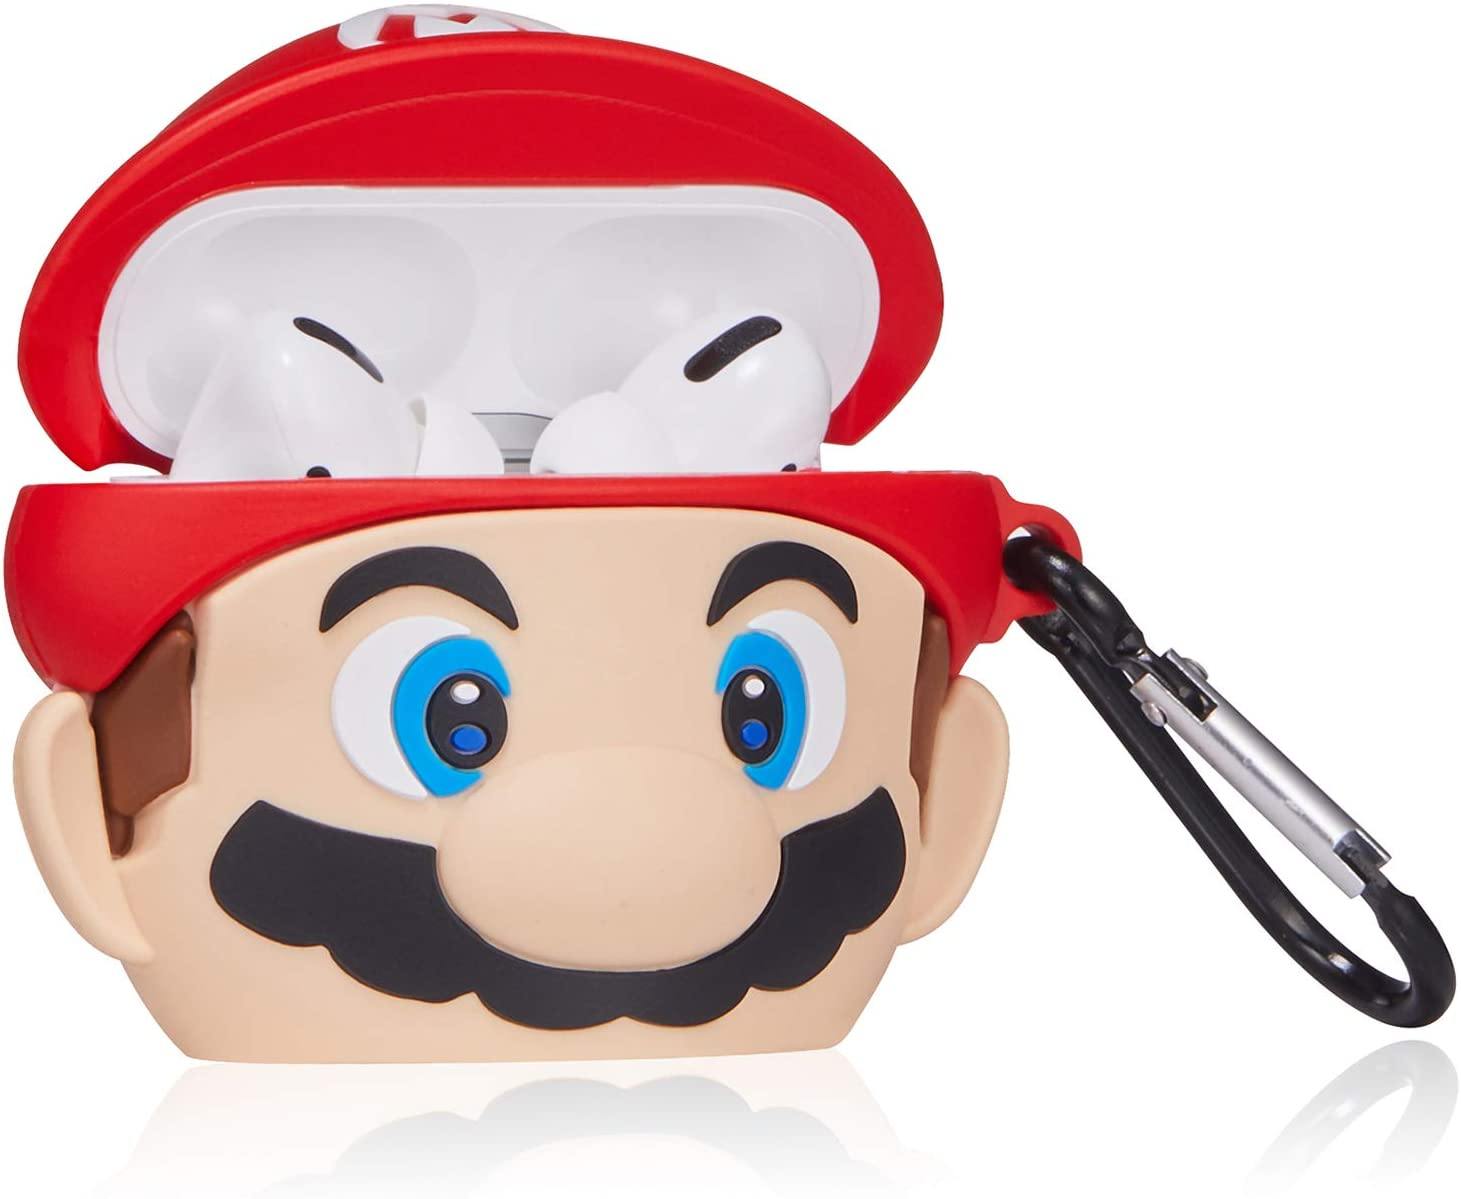 Mario Super Mario Airpods Case